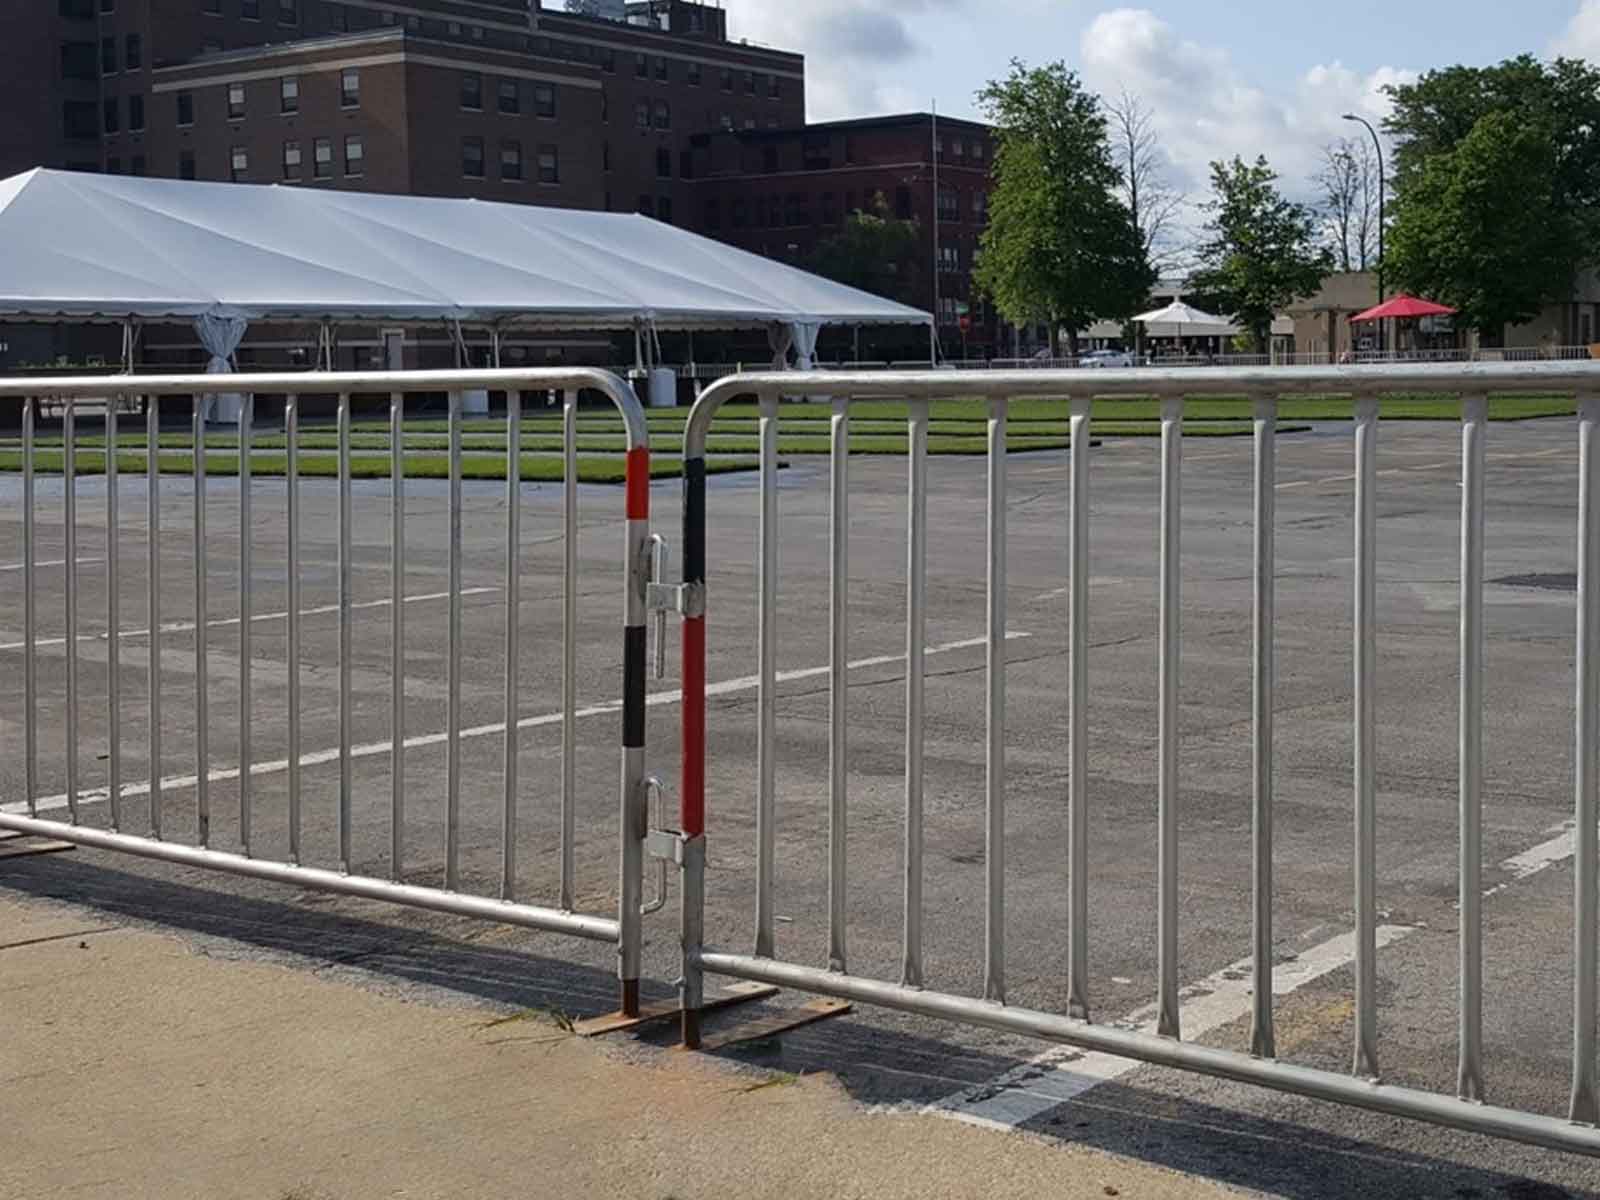 Special Event Bike Rack Barricade Fencing